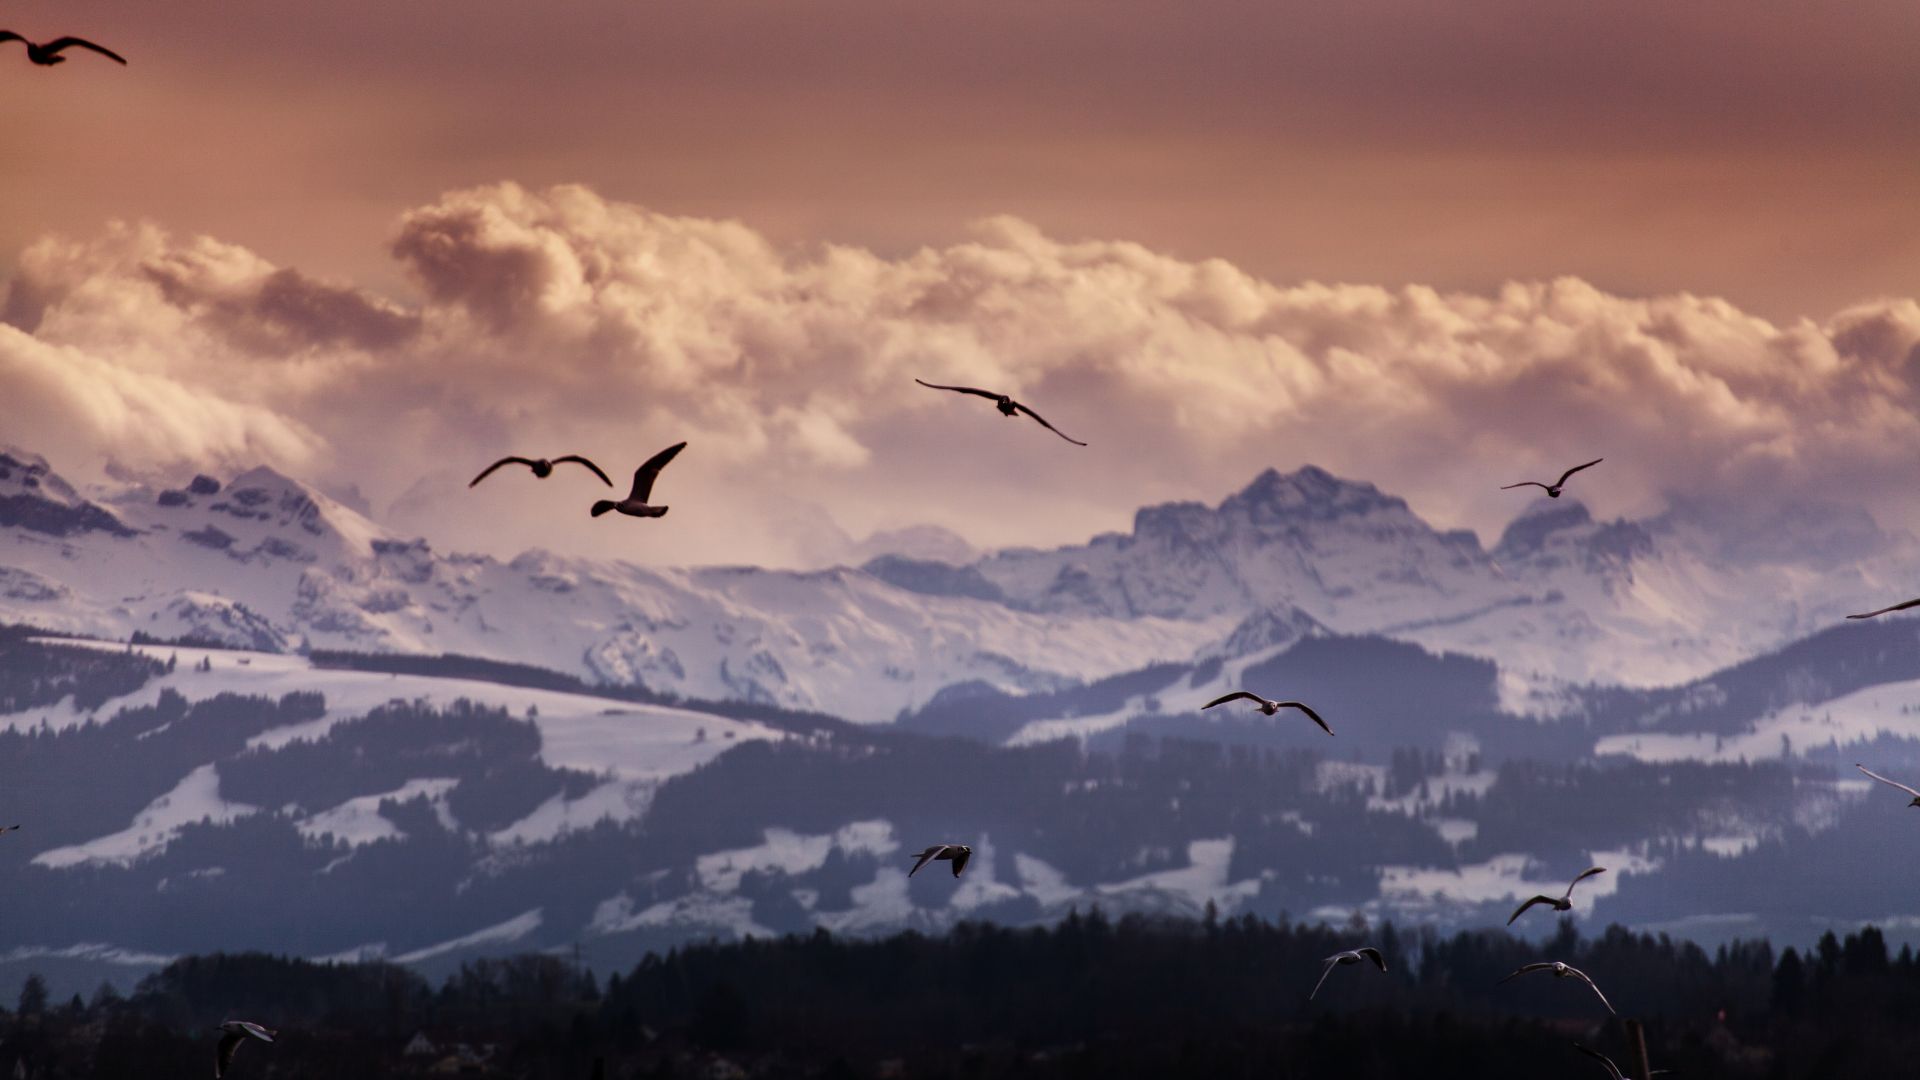 Switzerland, 5k, 4k wallpaper, 8k, Alps, mountains, seagulls, clouds (horizontal)